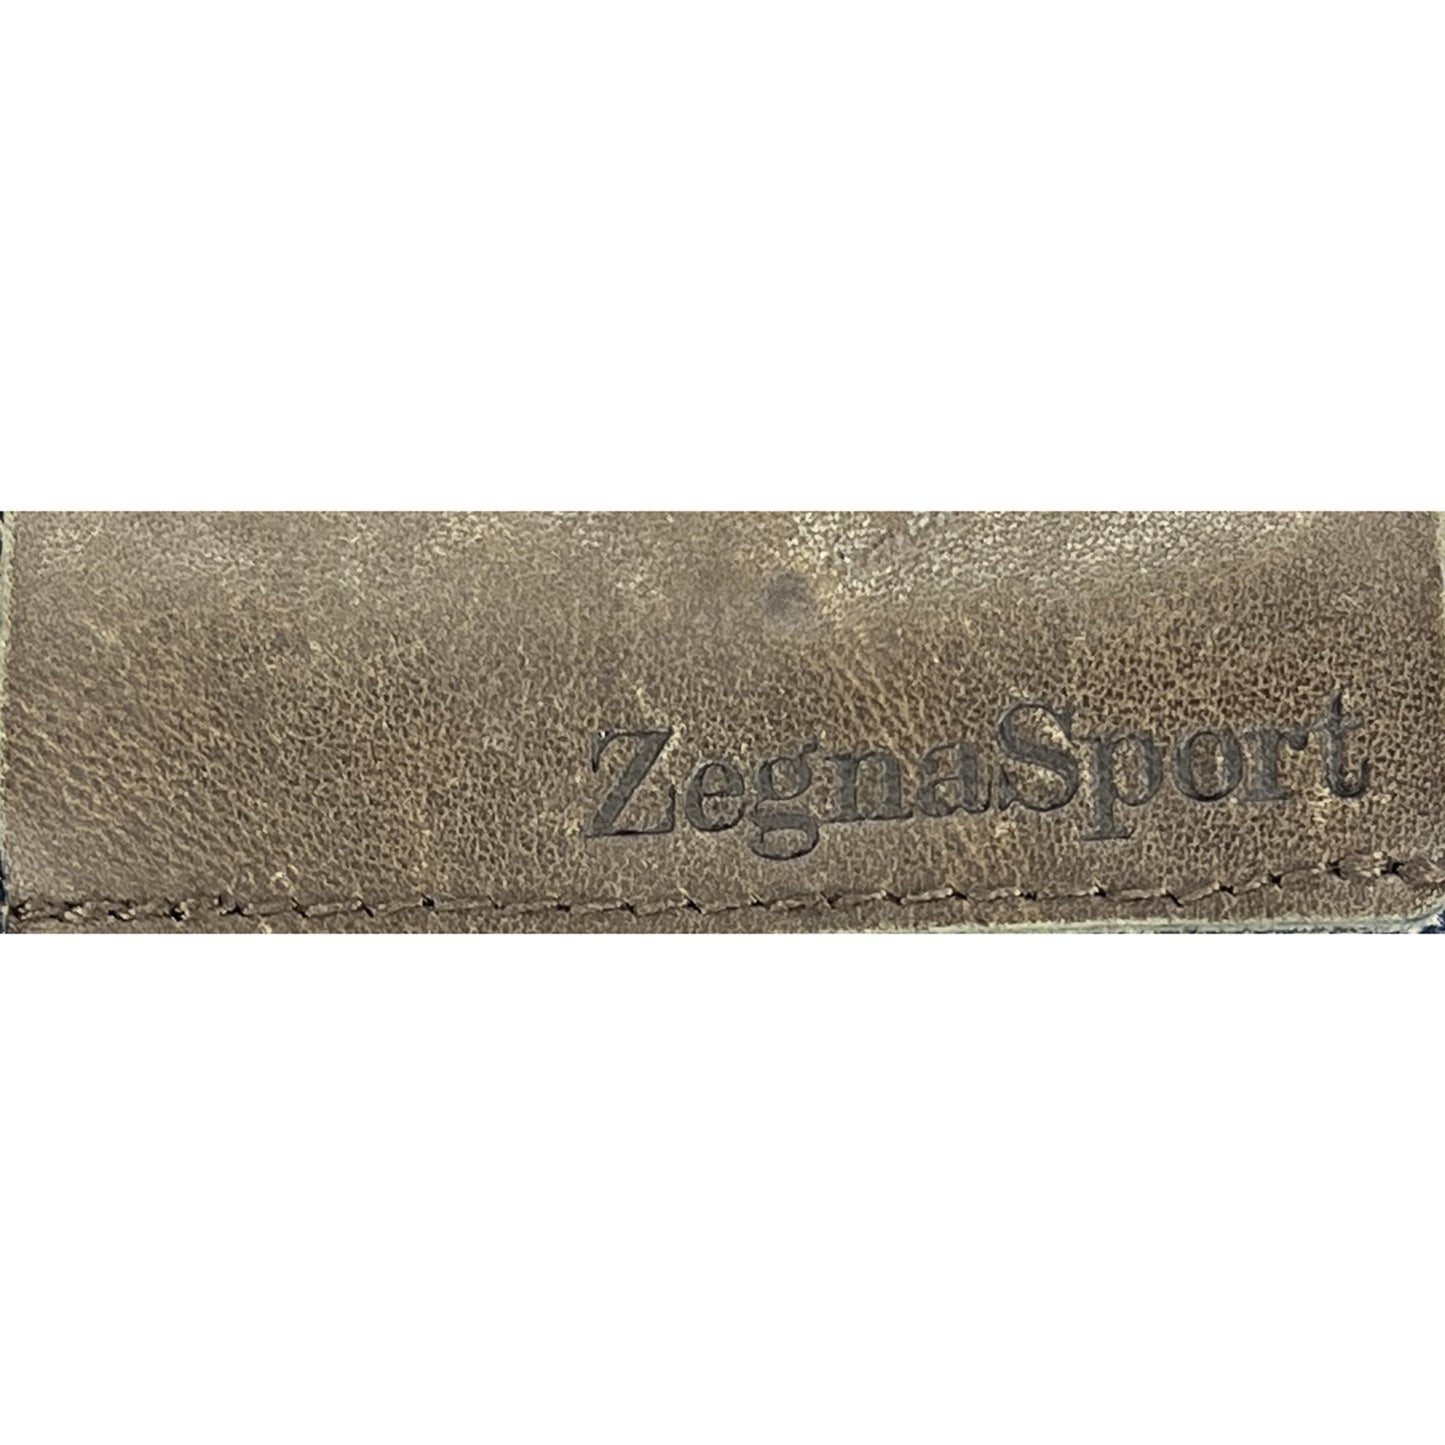 Zegna Sport Denim Jeans Dark Blue Size 34 SKU 000423-3